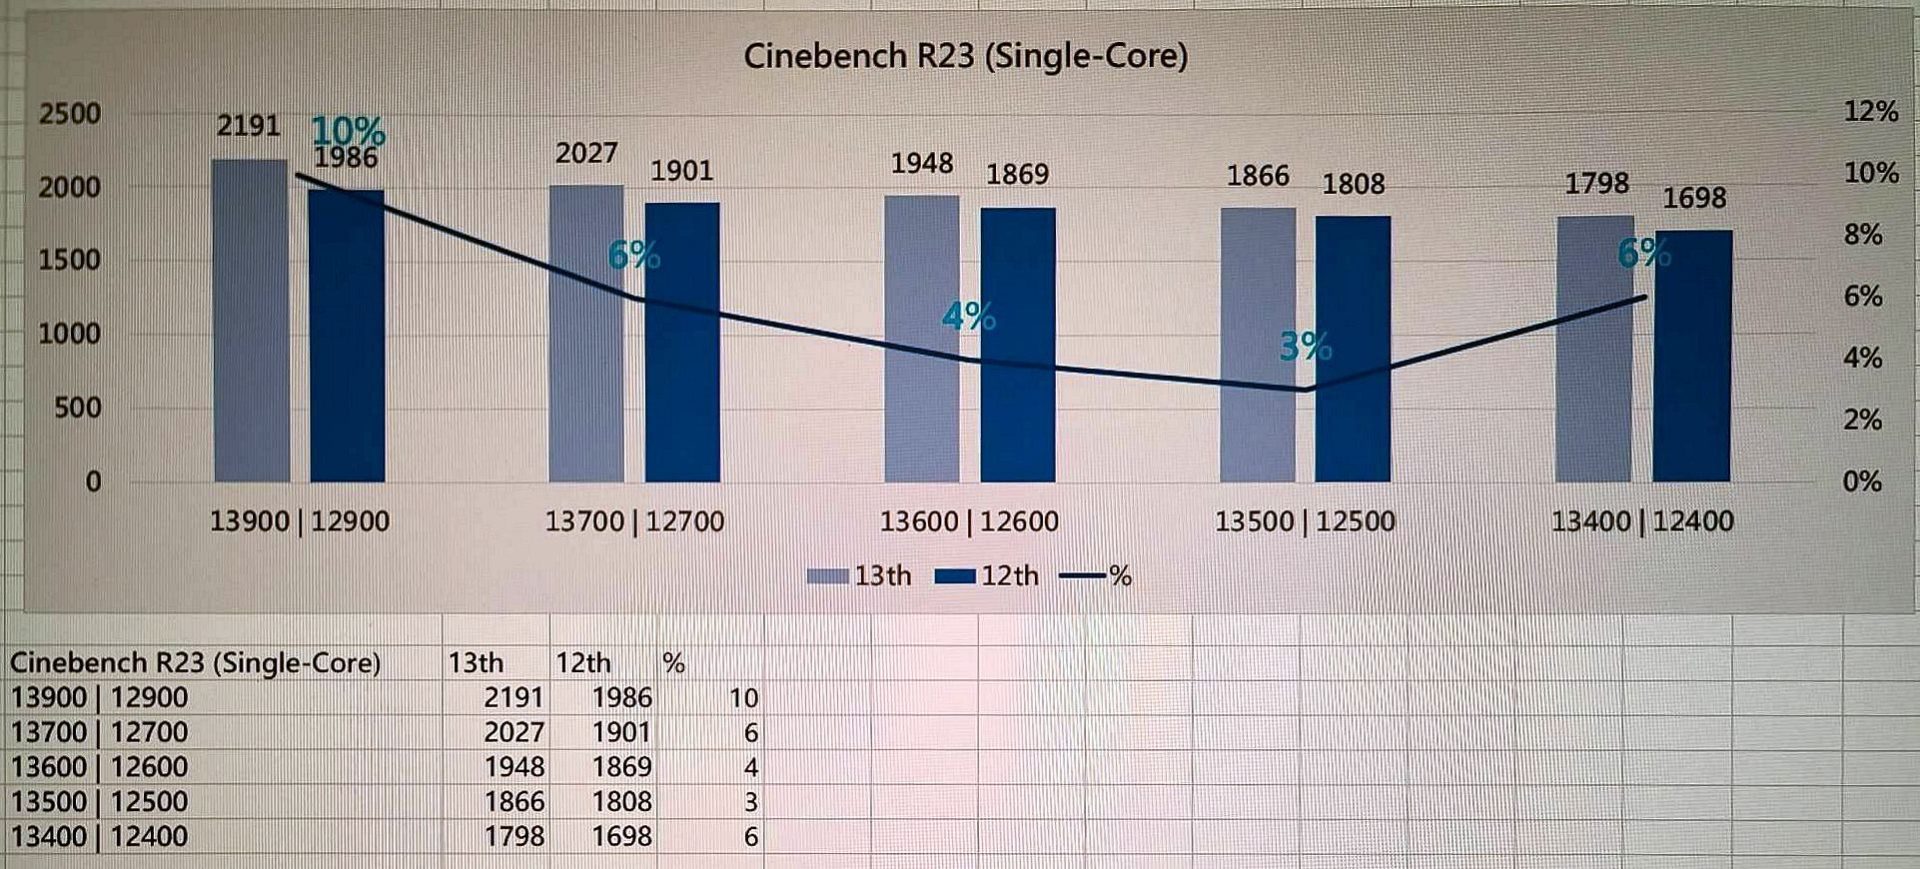 Single-core performance score of 13th generation Intel processors in Cinebench